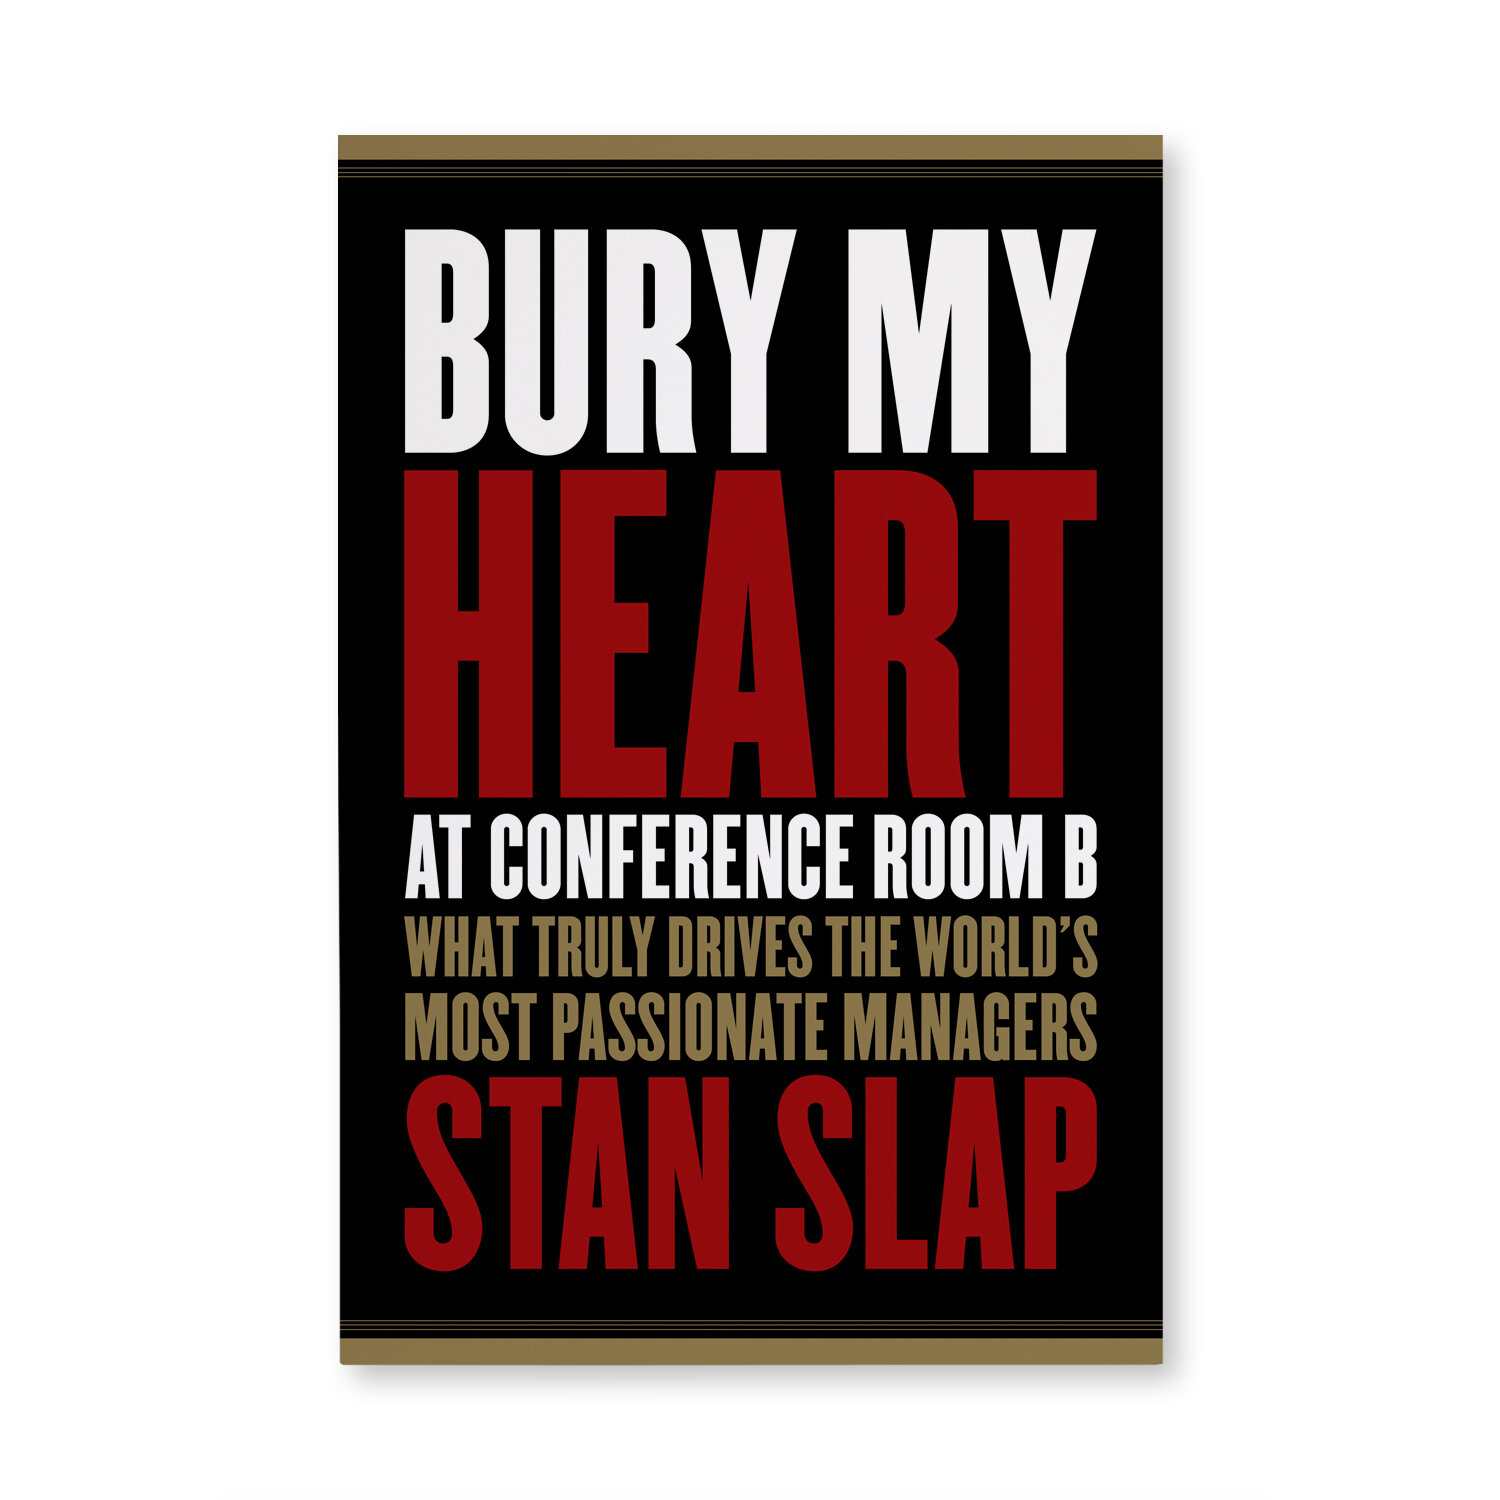 Stan_slap_3.jpg